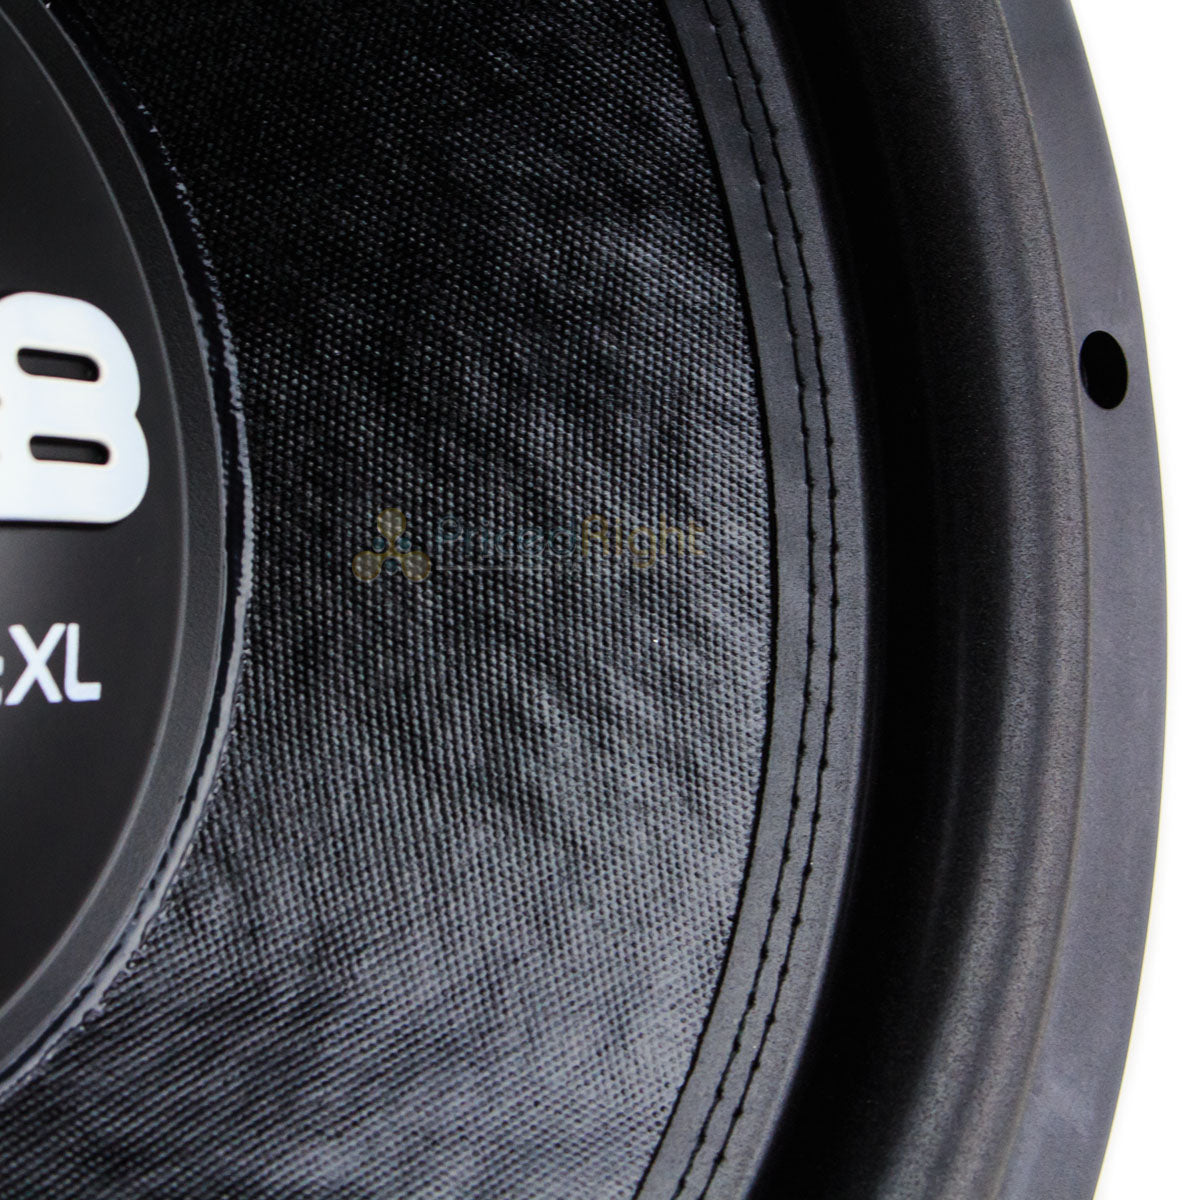 DS18 15" Subwoofer 2500 Watts Max Power Dual 4 Ohm Bass Sub Car Audio EXL-X15.4D